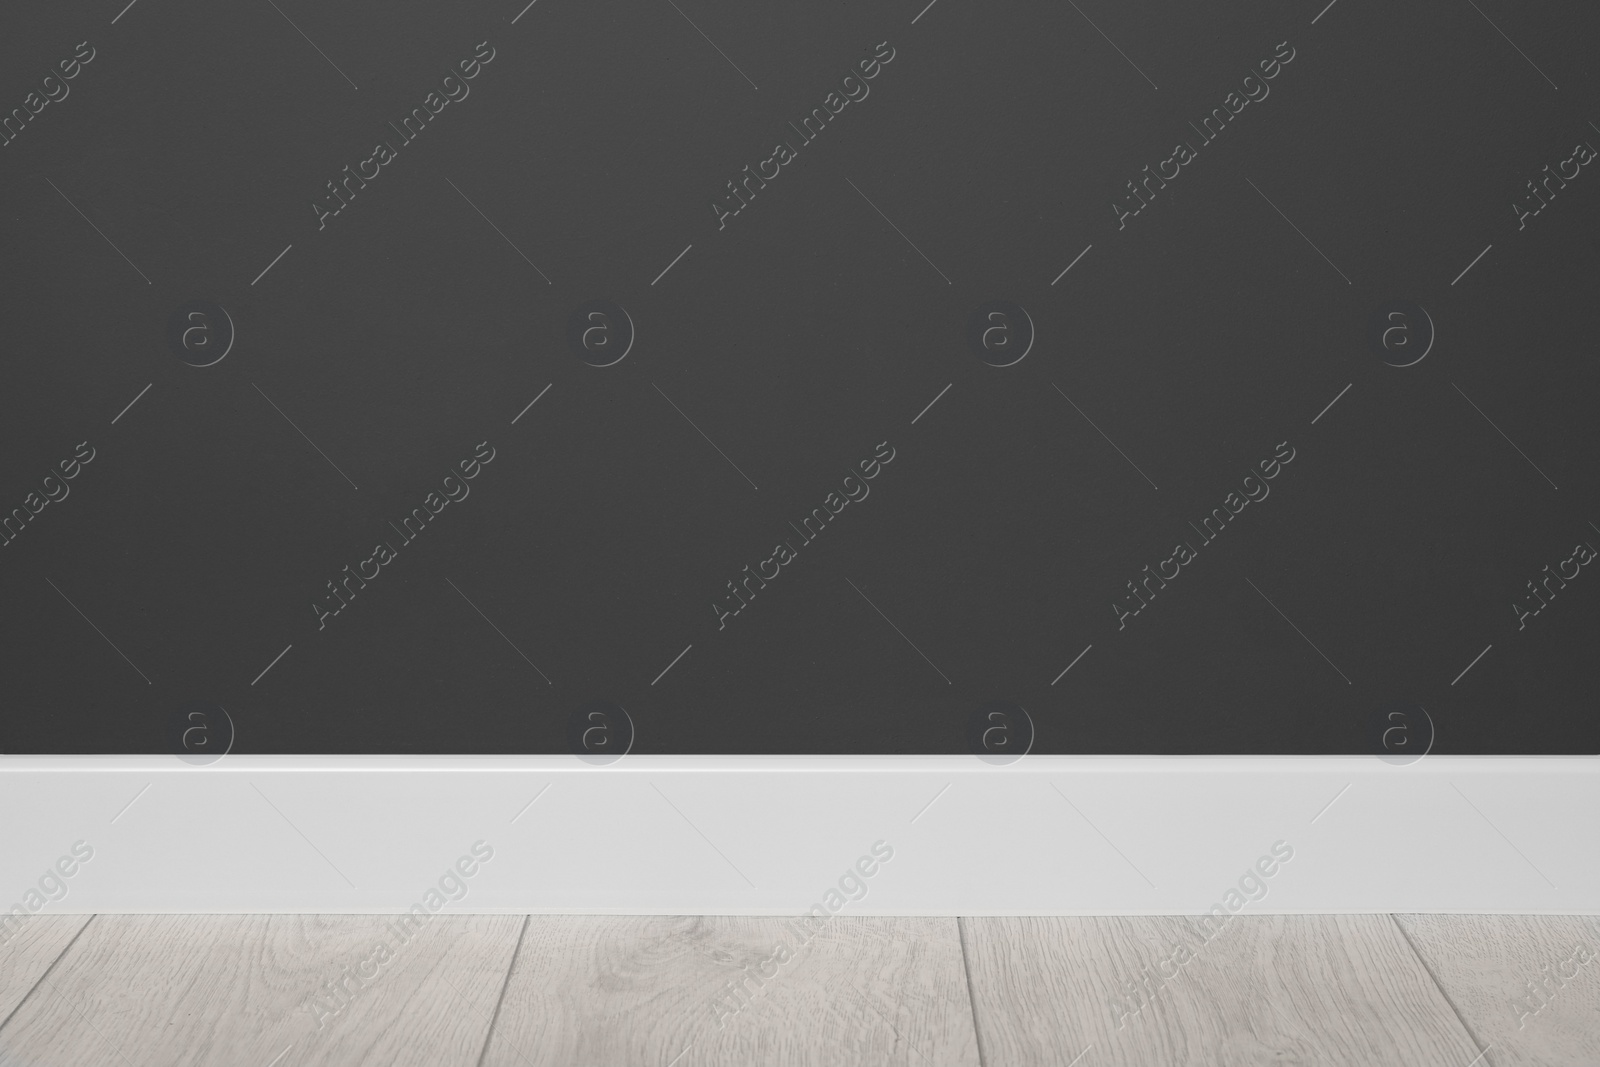 Photo of White plinth on laminated floor near black wall indoors